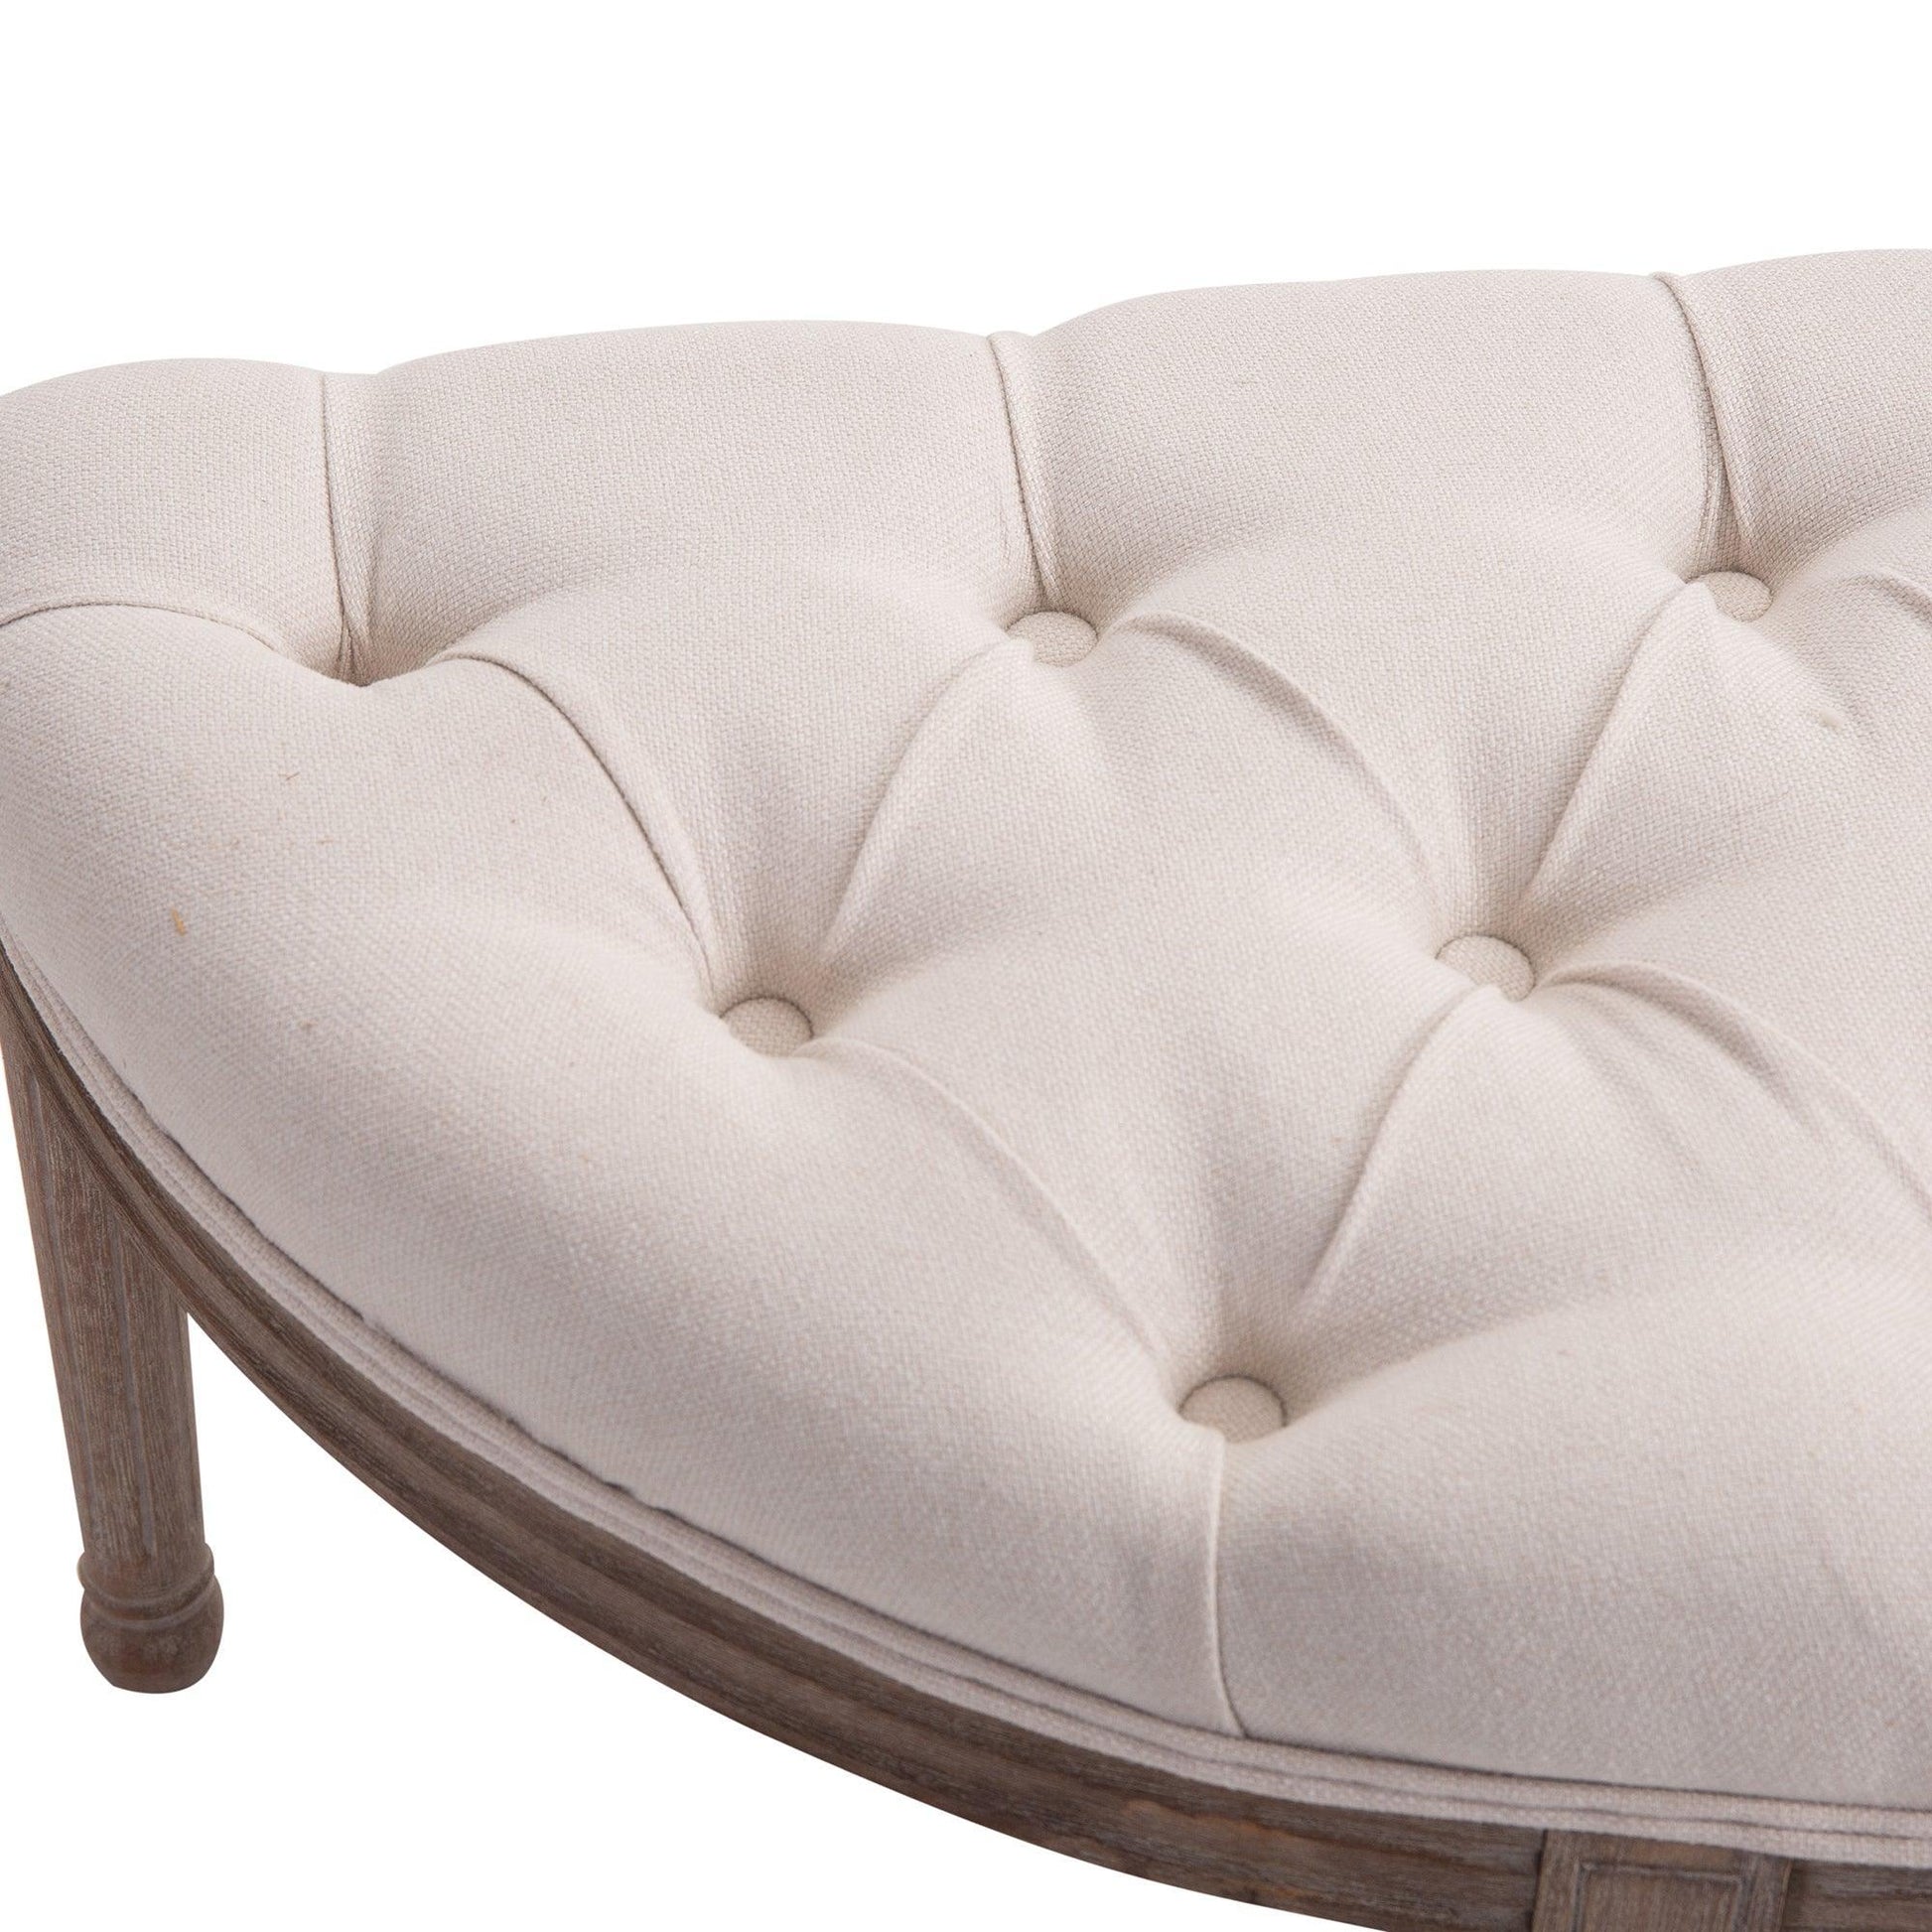 HOMCOM Half-Circle Ottoman Bench: Comfy Cream Seat - ALL4U RETAILER LTD